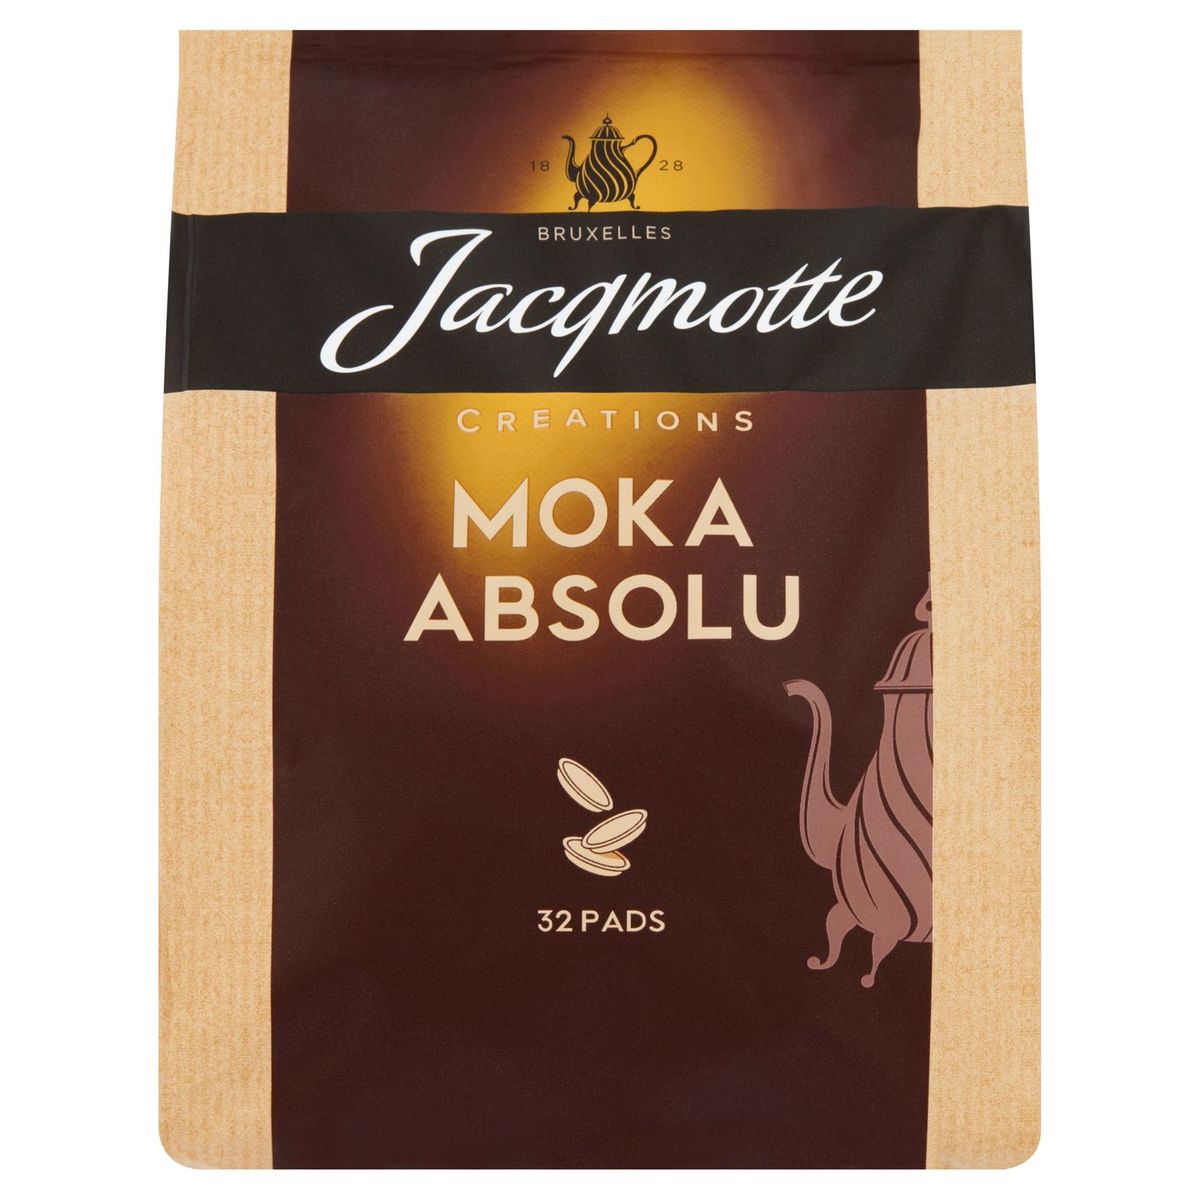 Jacqmotte Café Dosette Moka Absolu 32 Pads